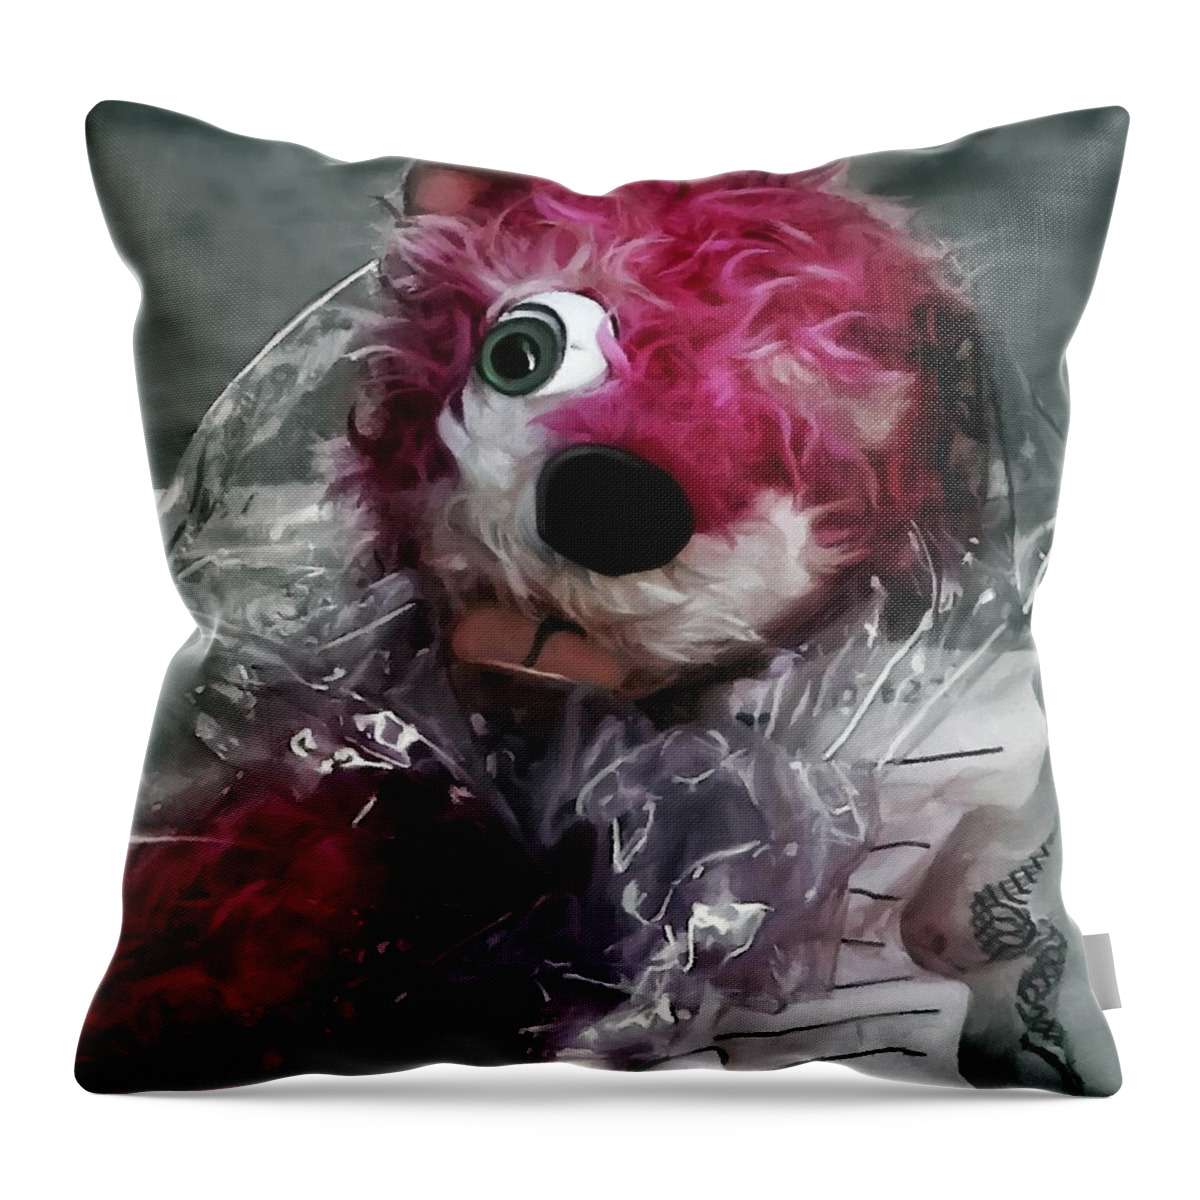 Breaking Bad Throw Pillow featuring the digital art Pink Teddy Bear in evidence bag @ TV serie Breaking Bad by Gabriel T Toro